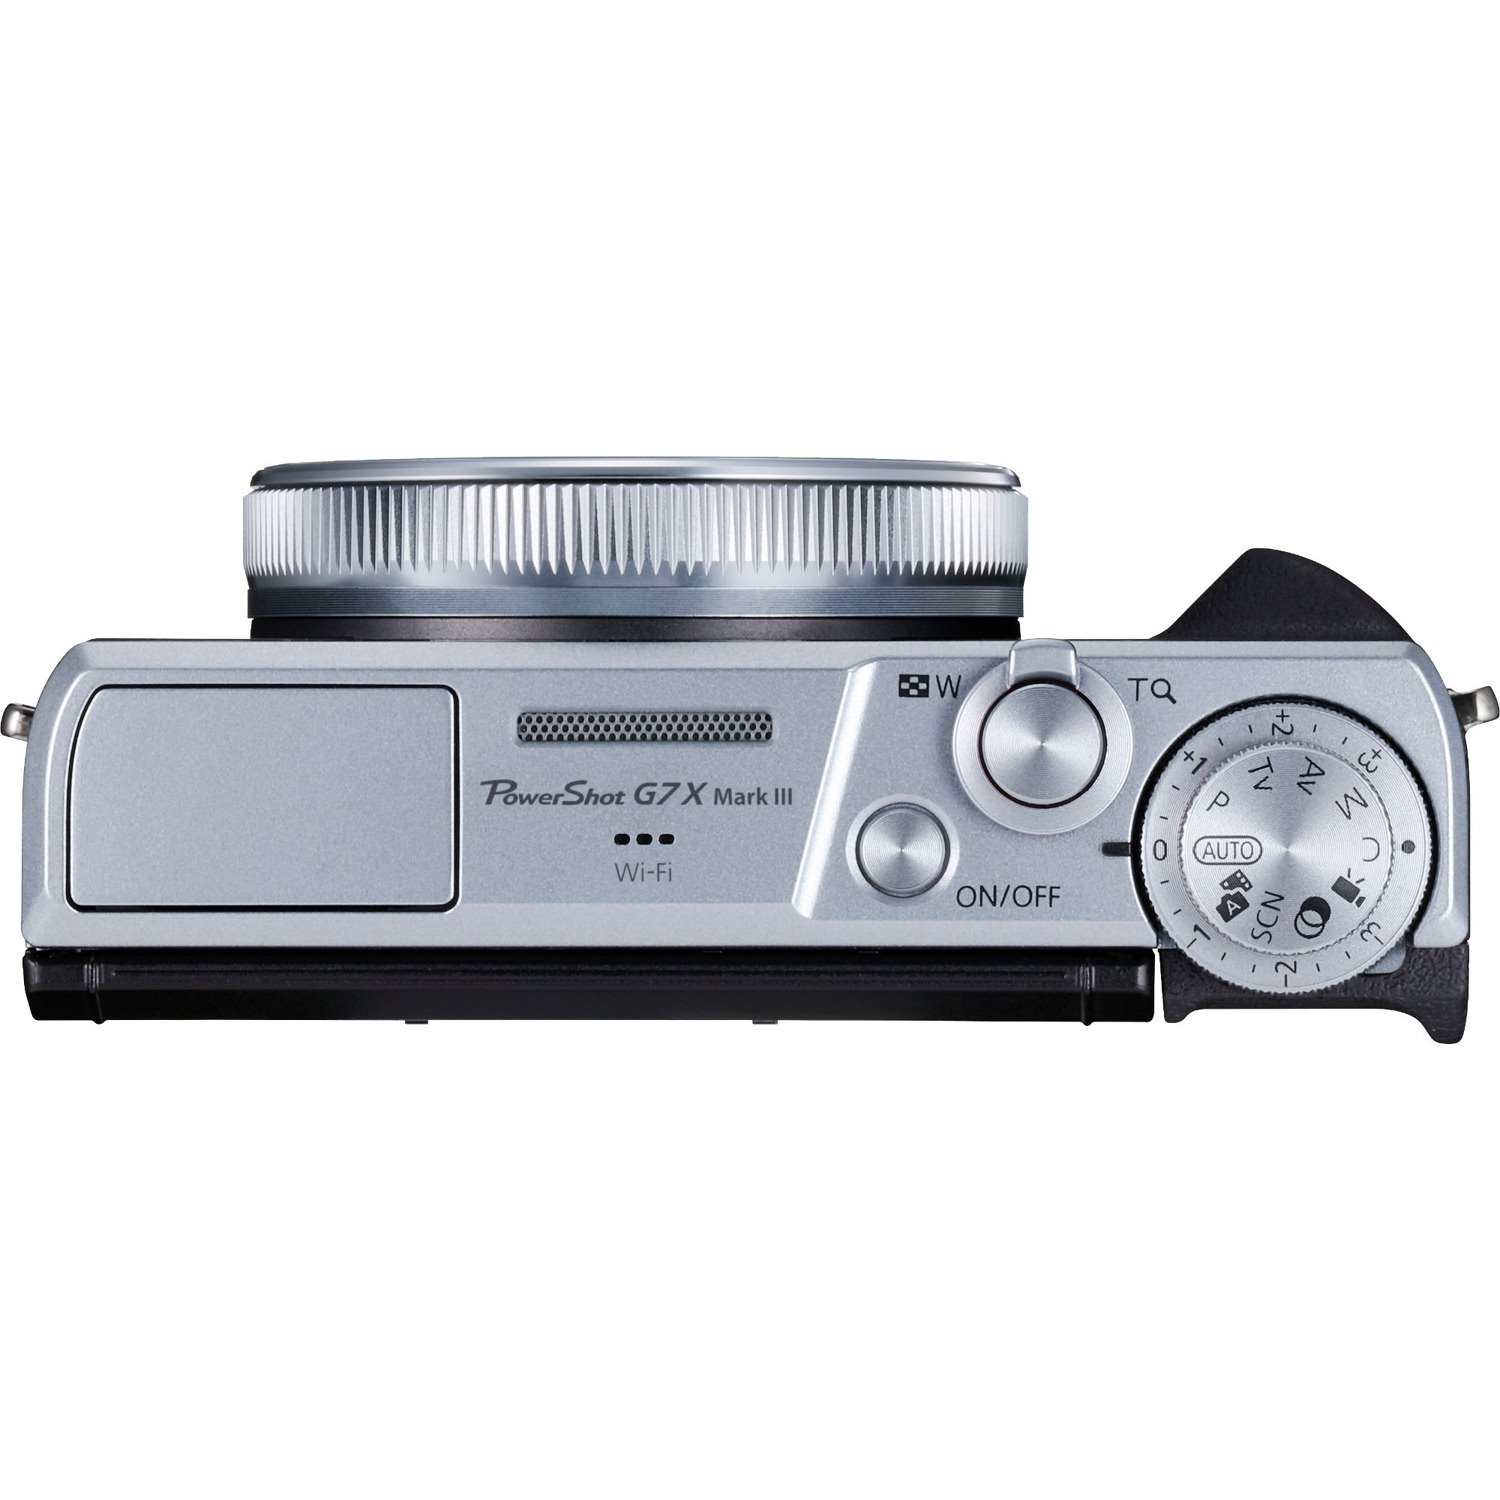 Canon PowerShot G7 X Mark III 20.1 Megapixel Compact Camera - Silver